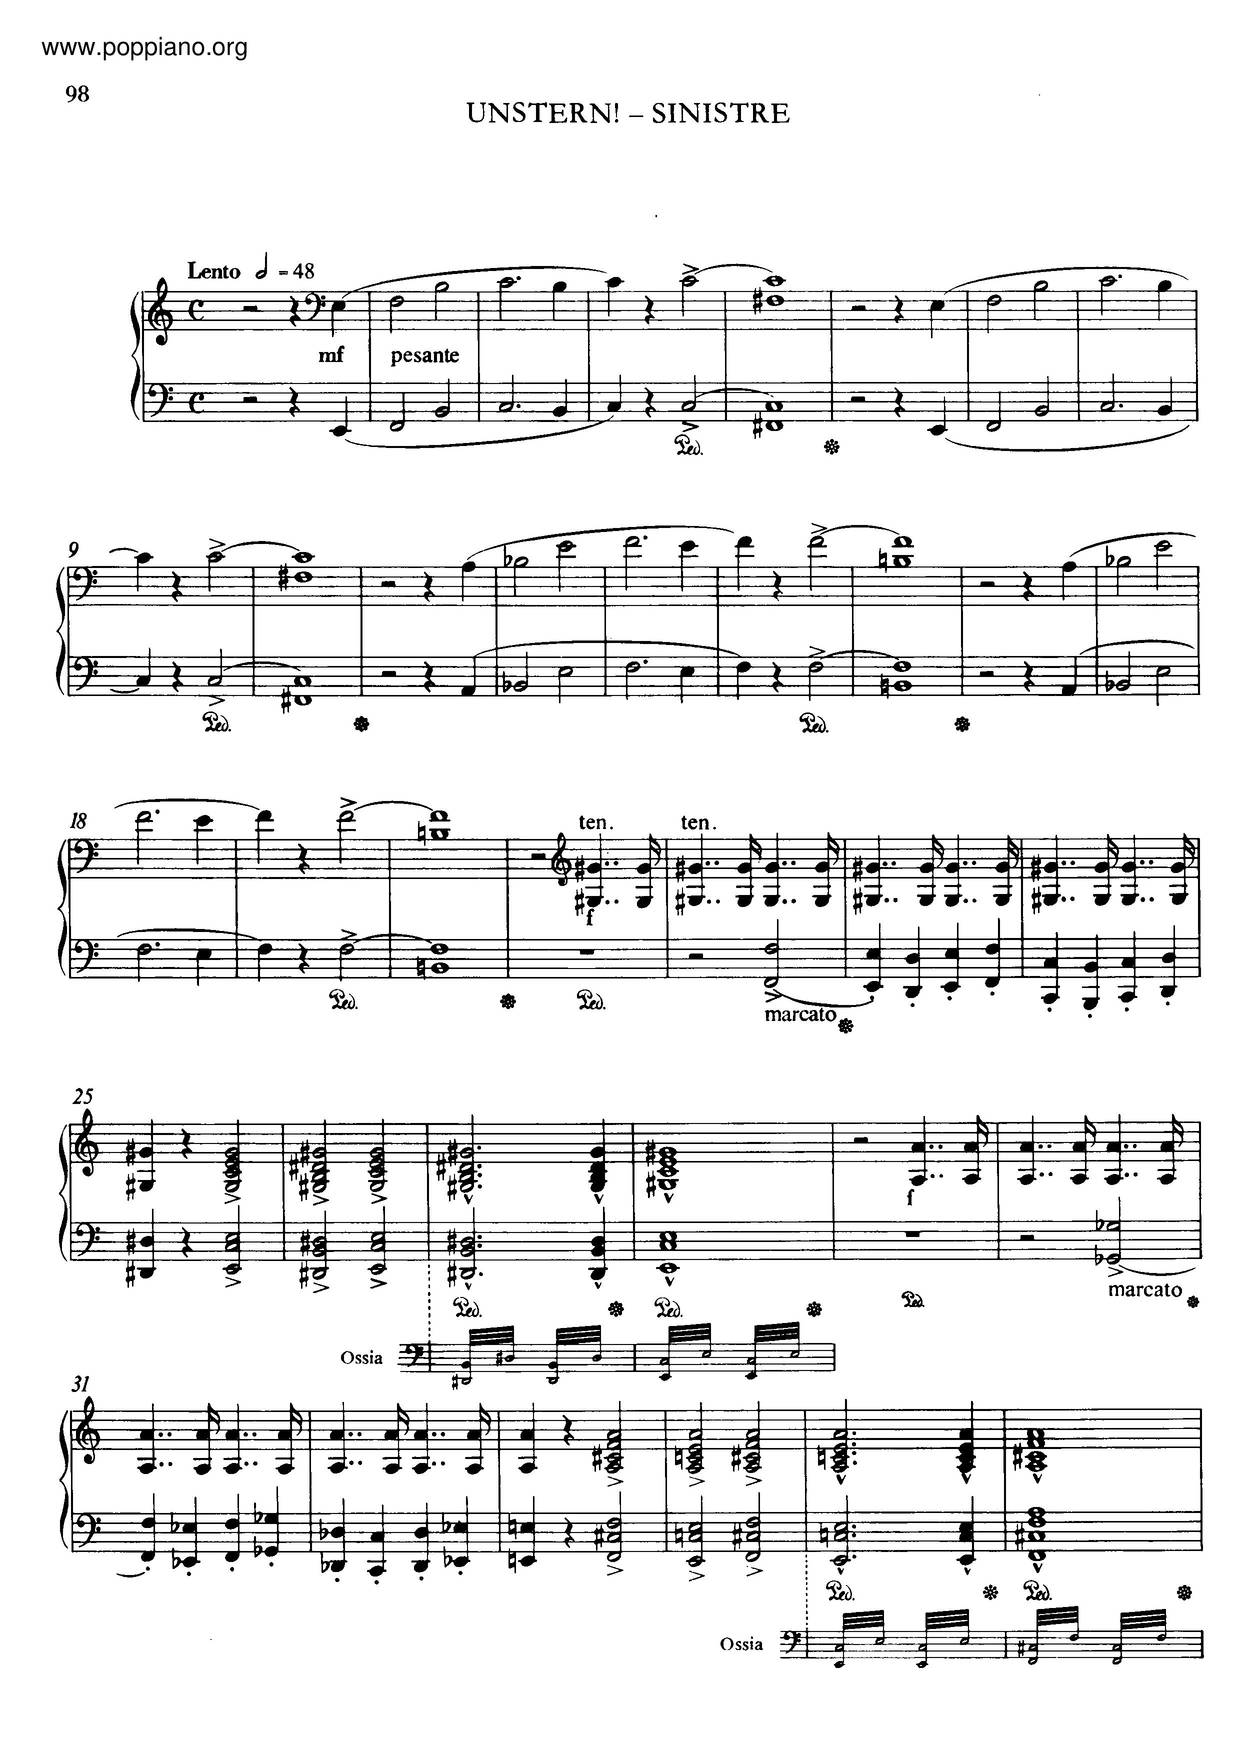 Unstern - Sinistreピアノ譜